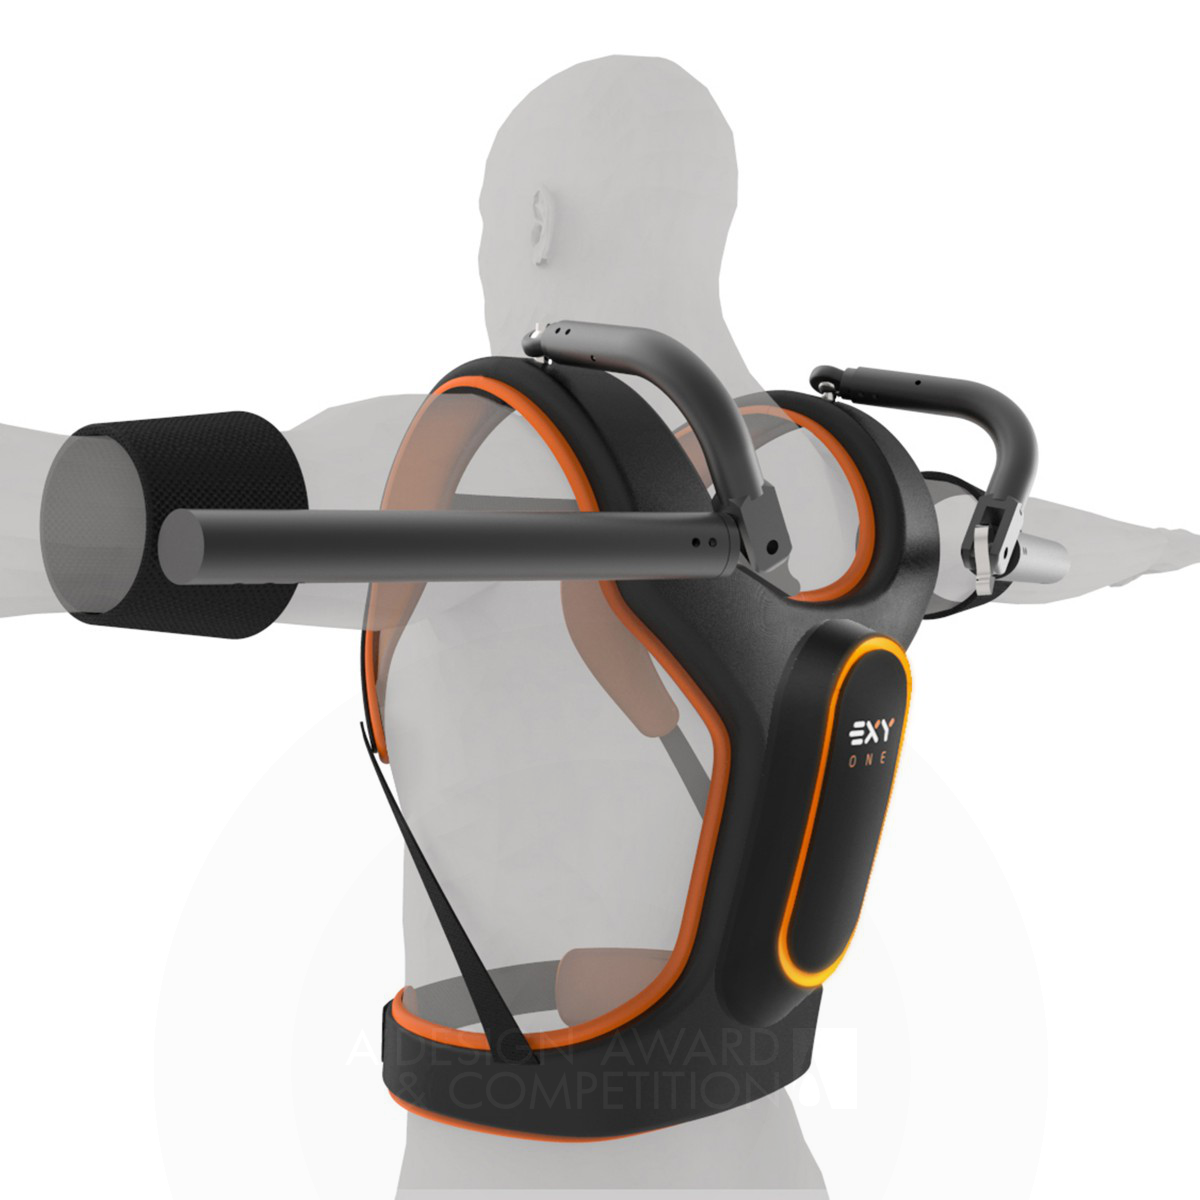 ExyOne Shoulder Wearable Exoskeleton by Arbo Design Iron Cybernetics, Prosthesis and Implant Design Award Winner 2020 